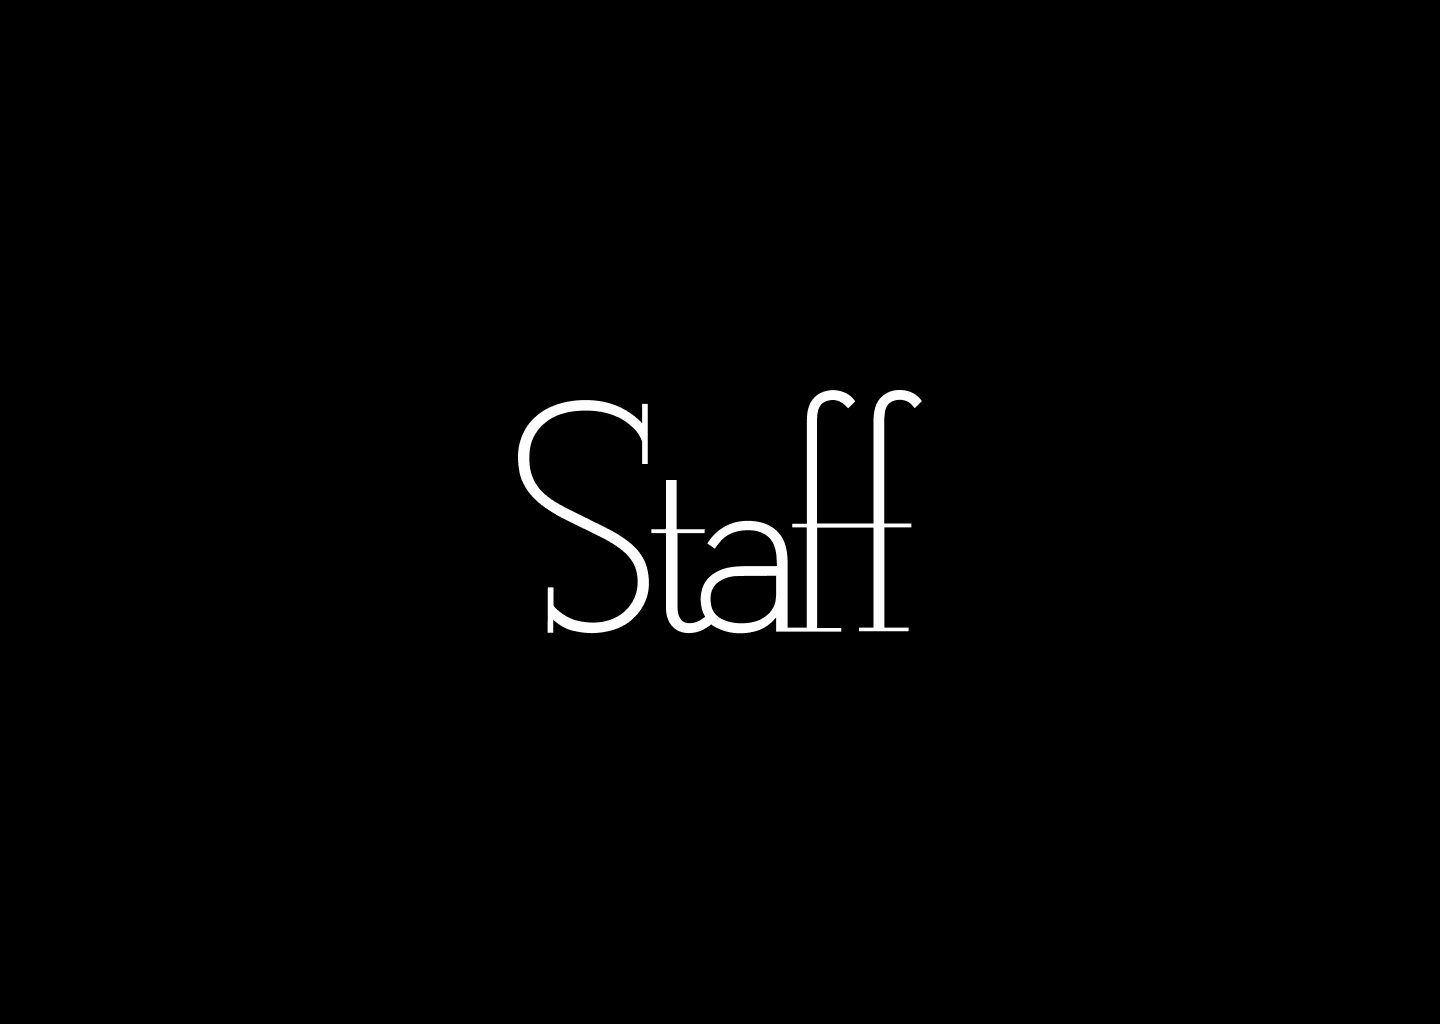 staff text logomark set against plain black background